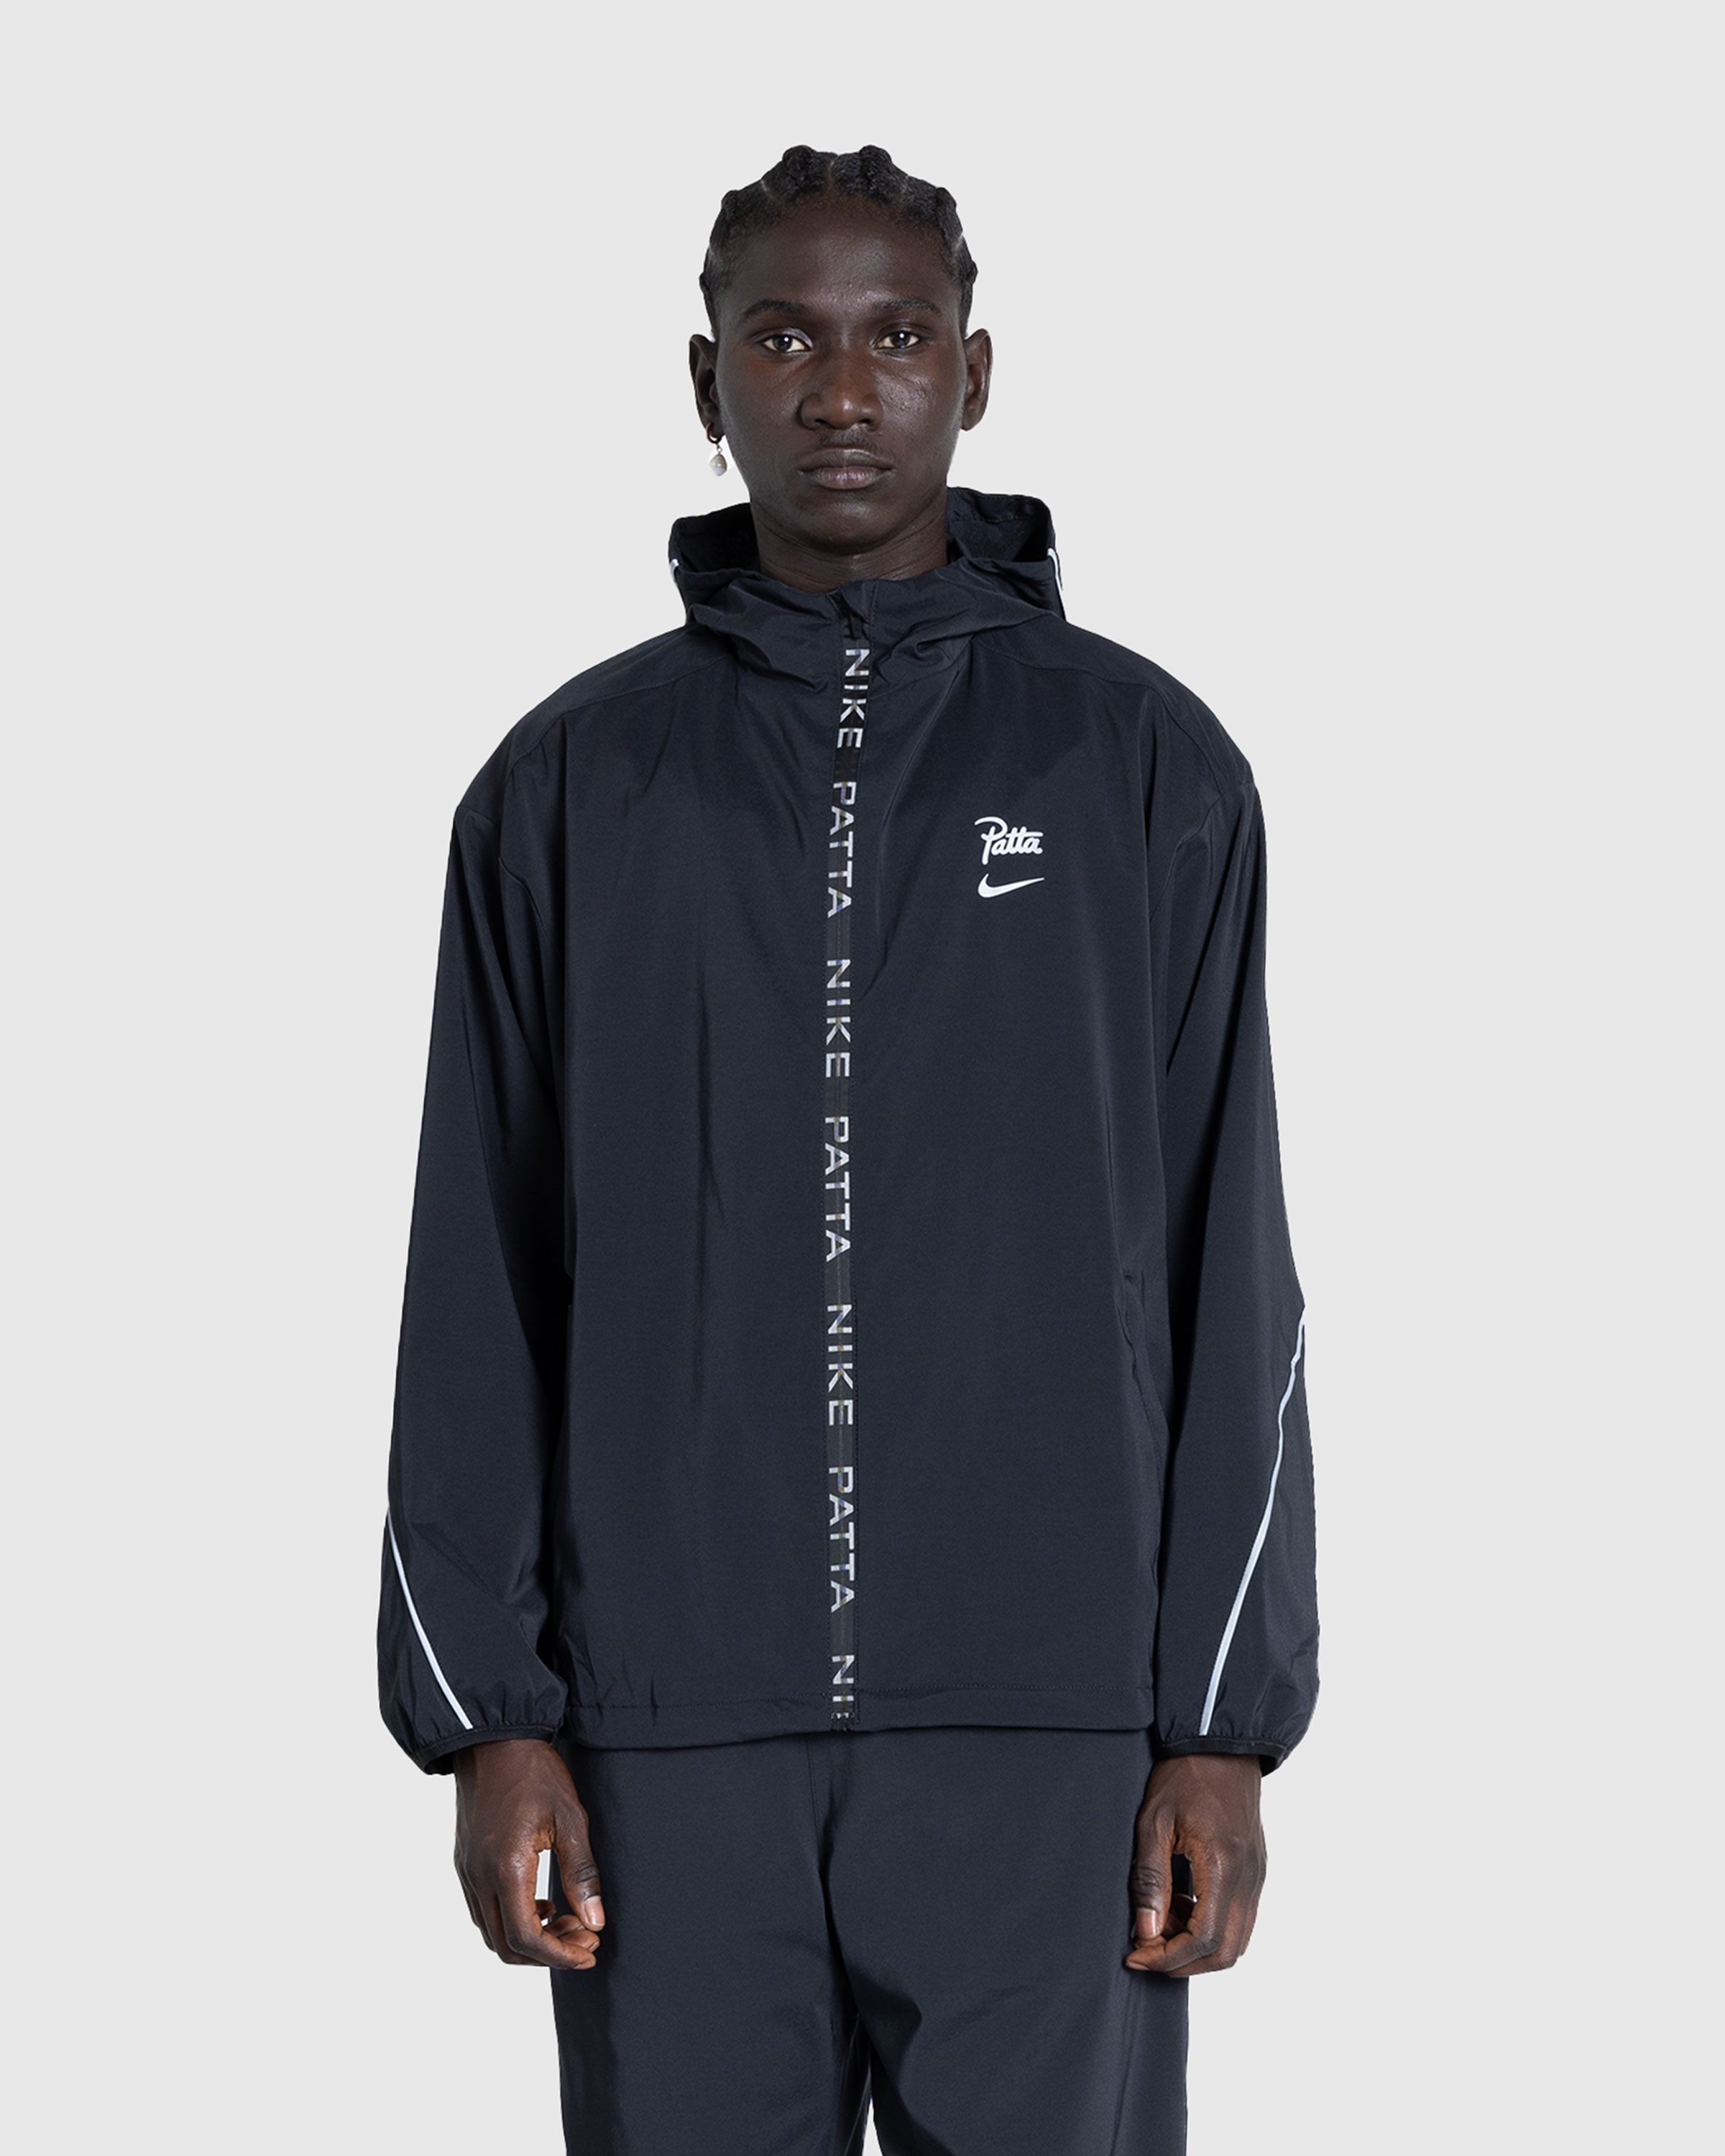 Nike x Patta – Men's Full-Zip Jacket Black - Jackets - Black - Image 2